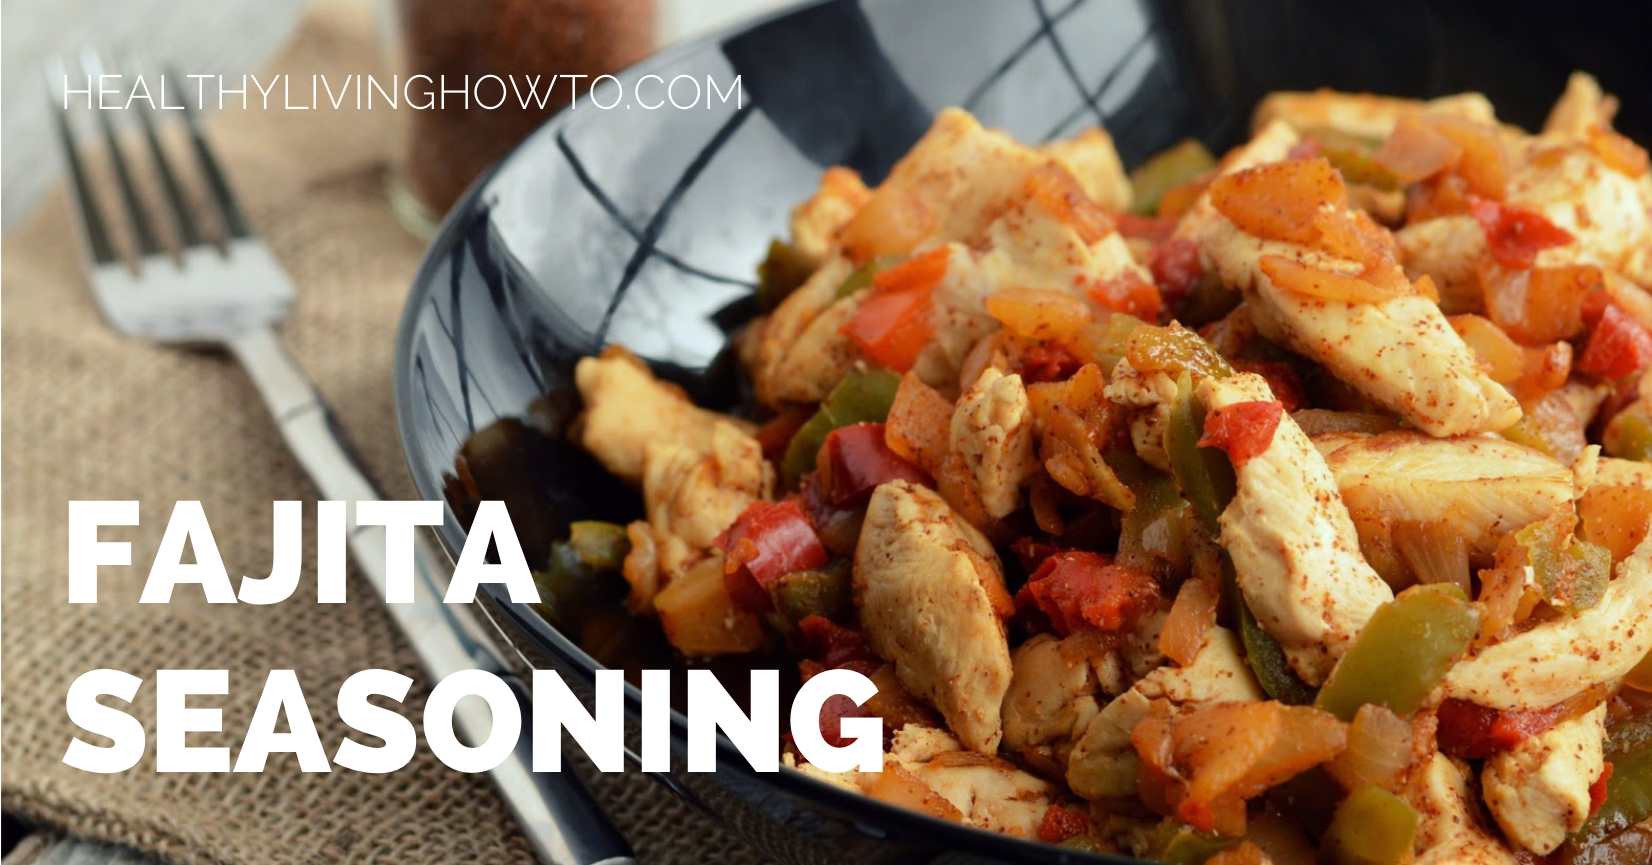 Healthy Homemade Fajita Seasoning | healthylivinghowto.com